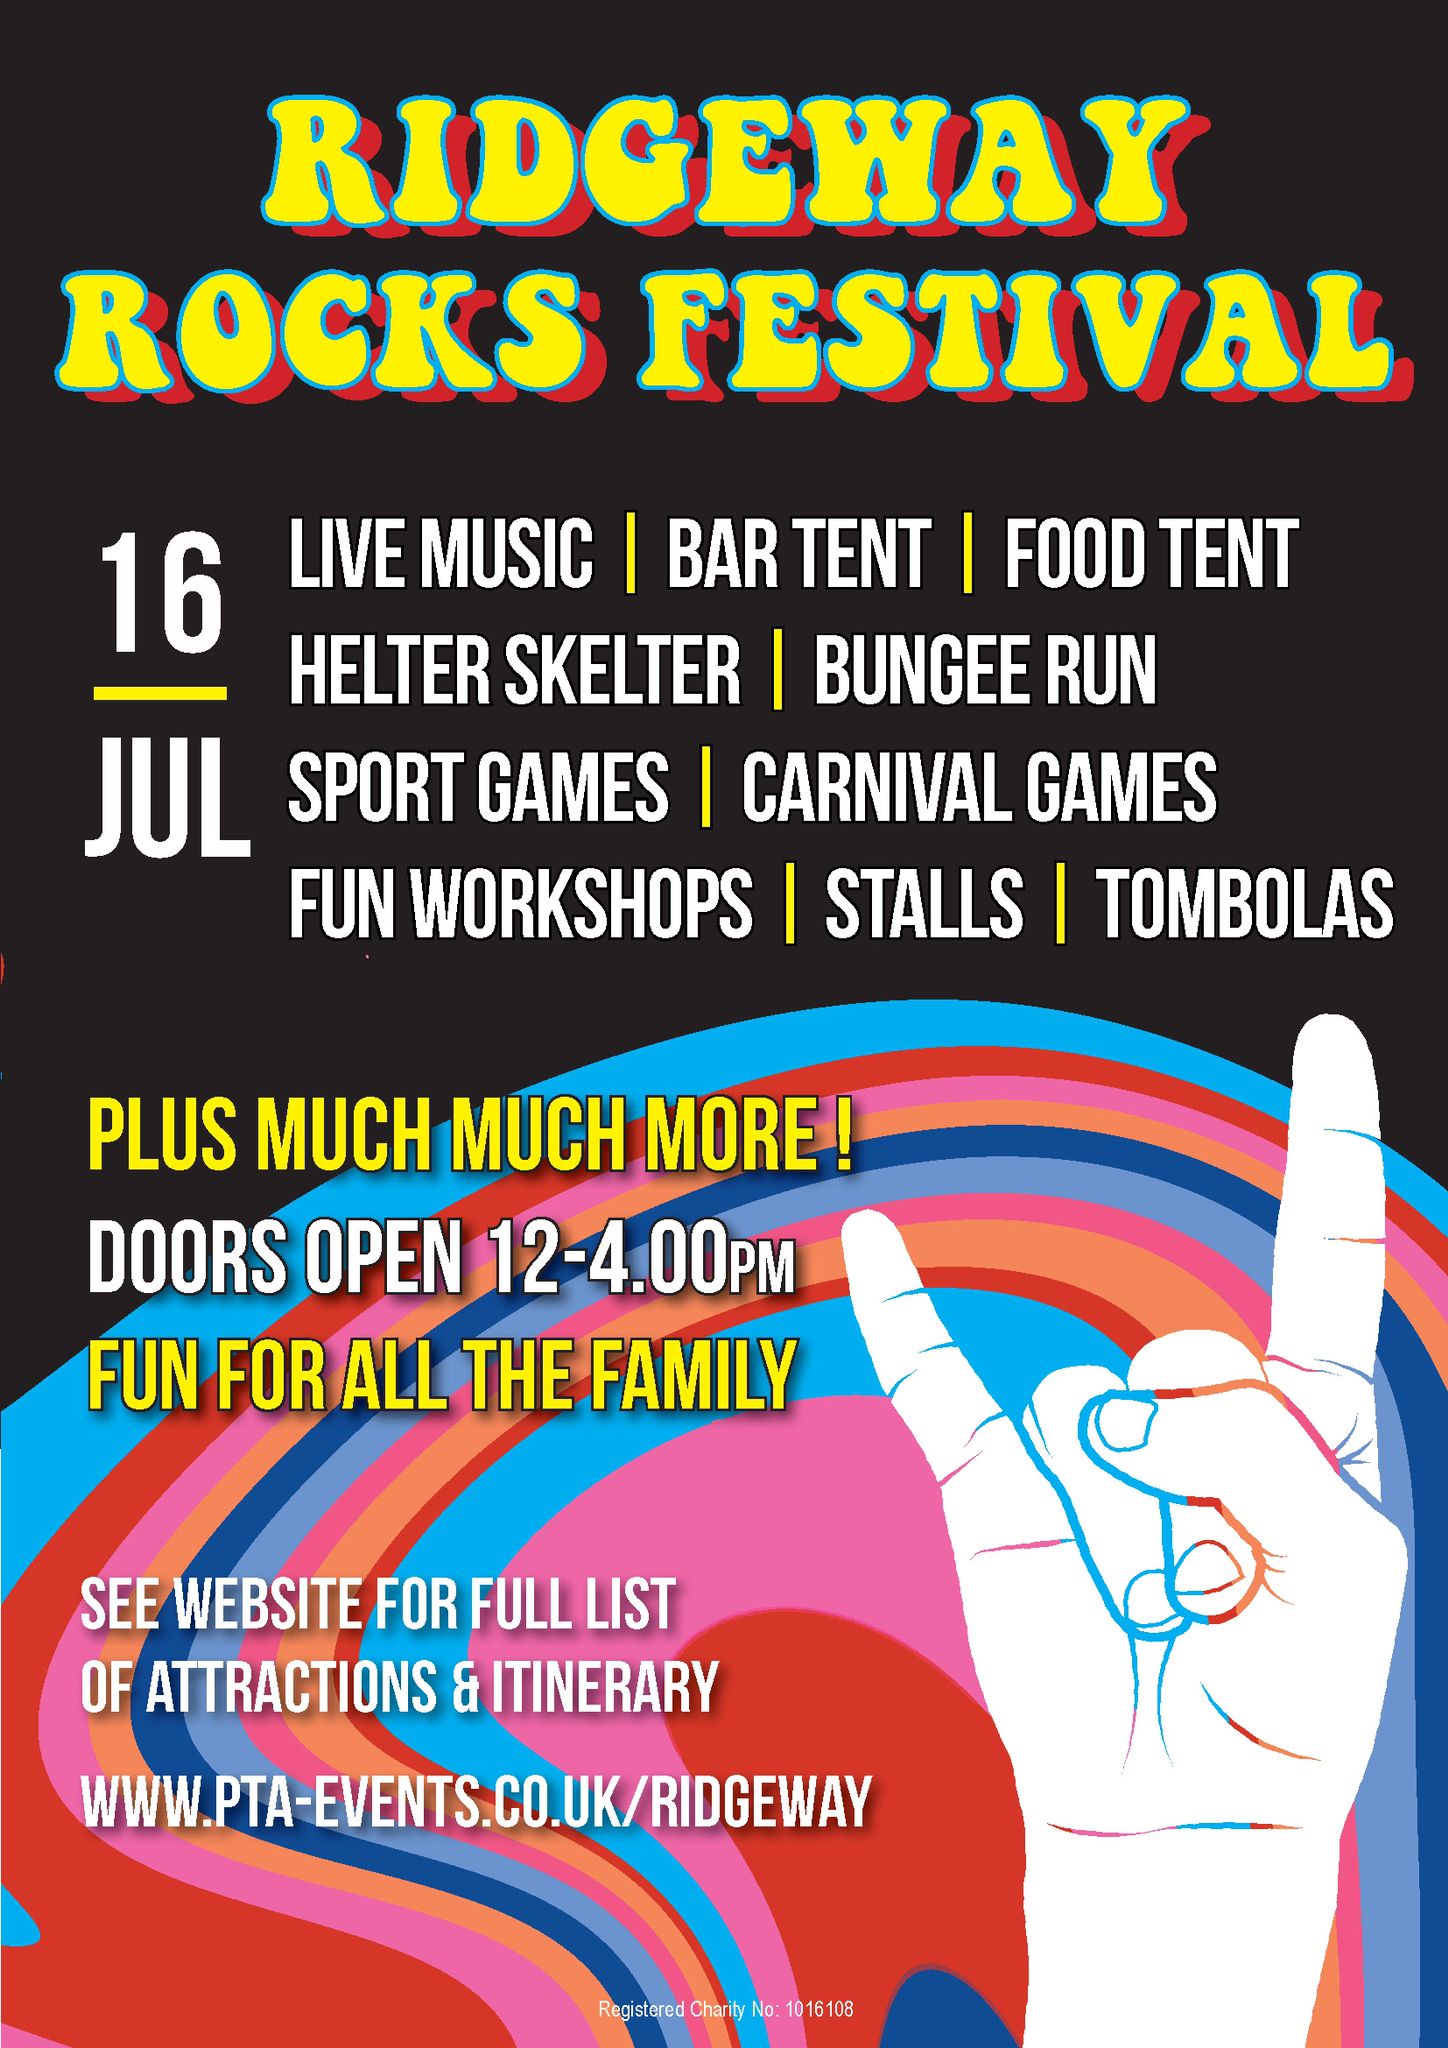 Entry per person - Ridgeway Rocks Summer Festival 2022